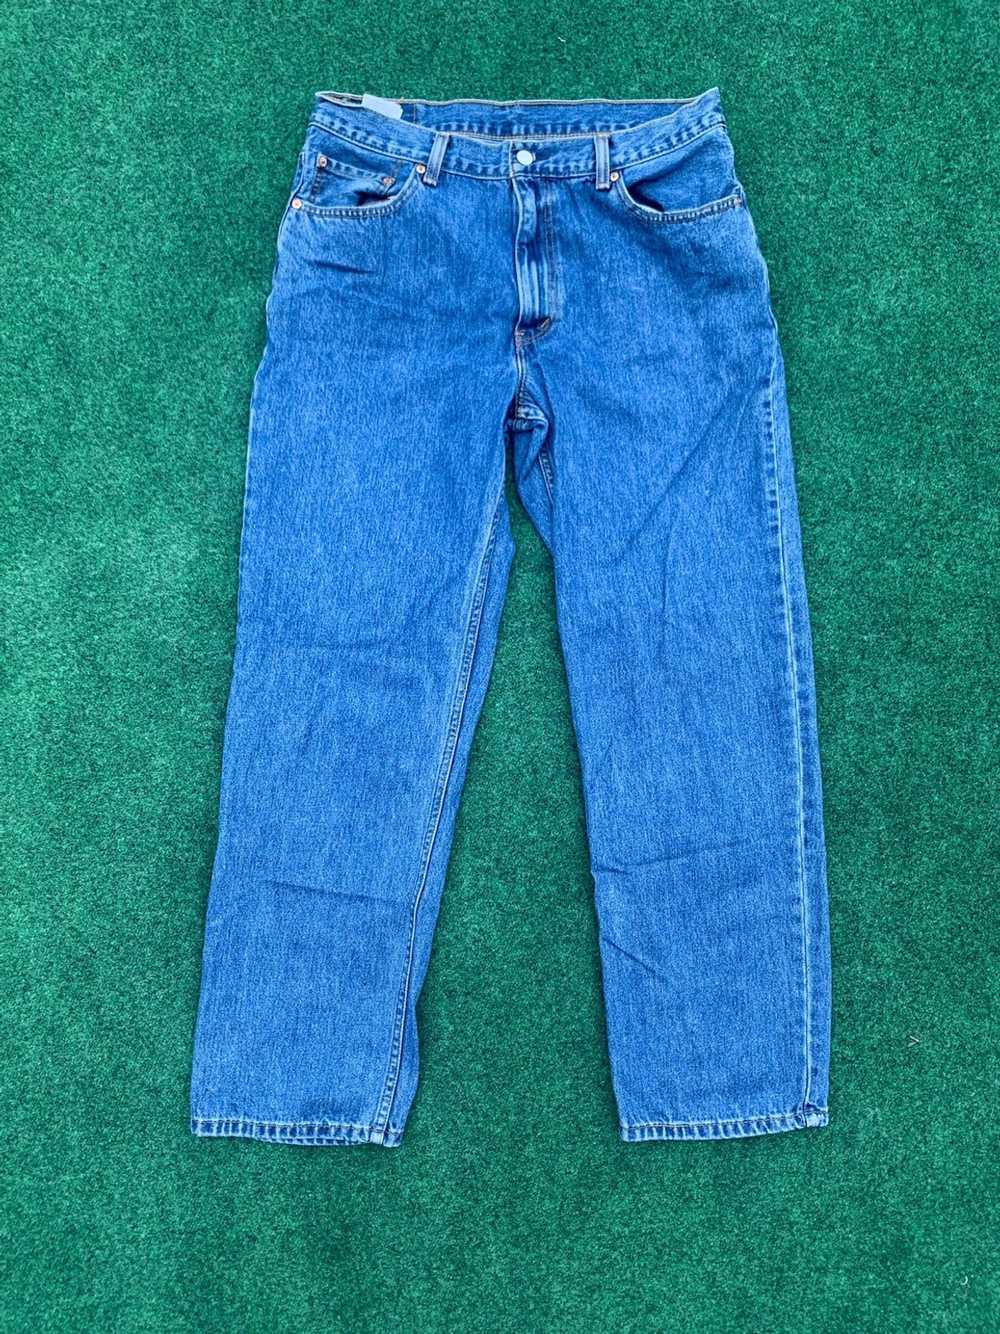 Levi's Vintage Levi’s 550 dark wash jeans - image 3